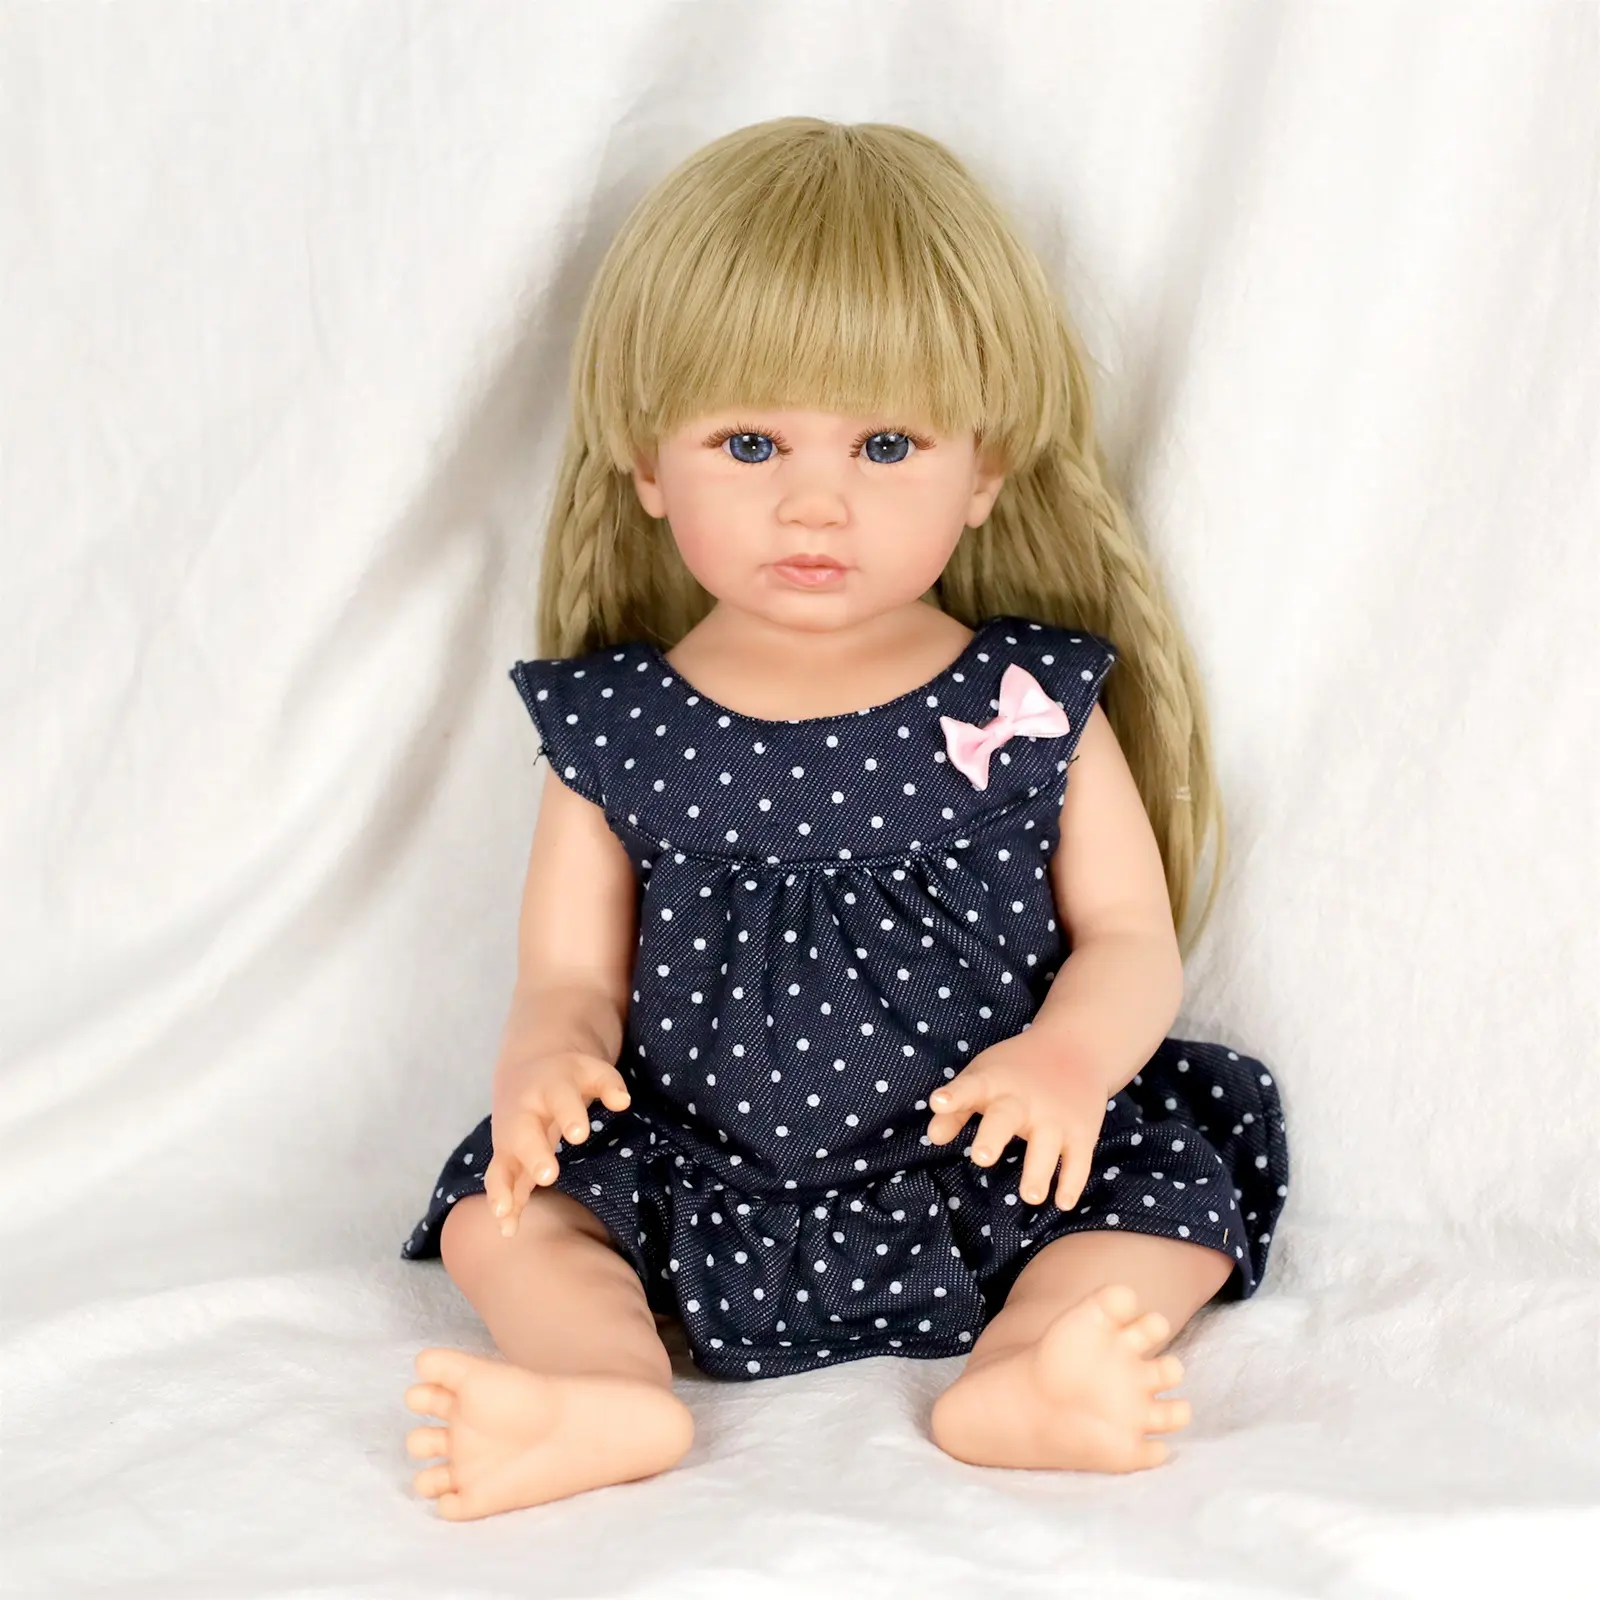 19 inch Wholesale Pretty Design Alive Lifelike Full Body Silicone Doll Vinyl Newborn Reborn Dolls for Girls